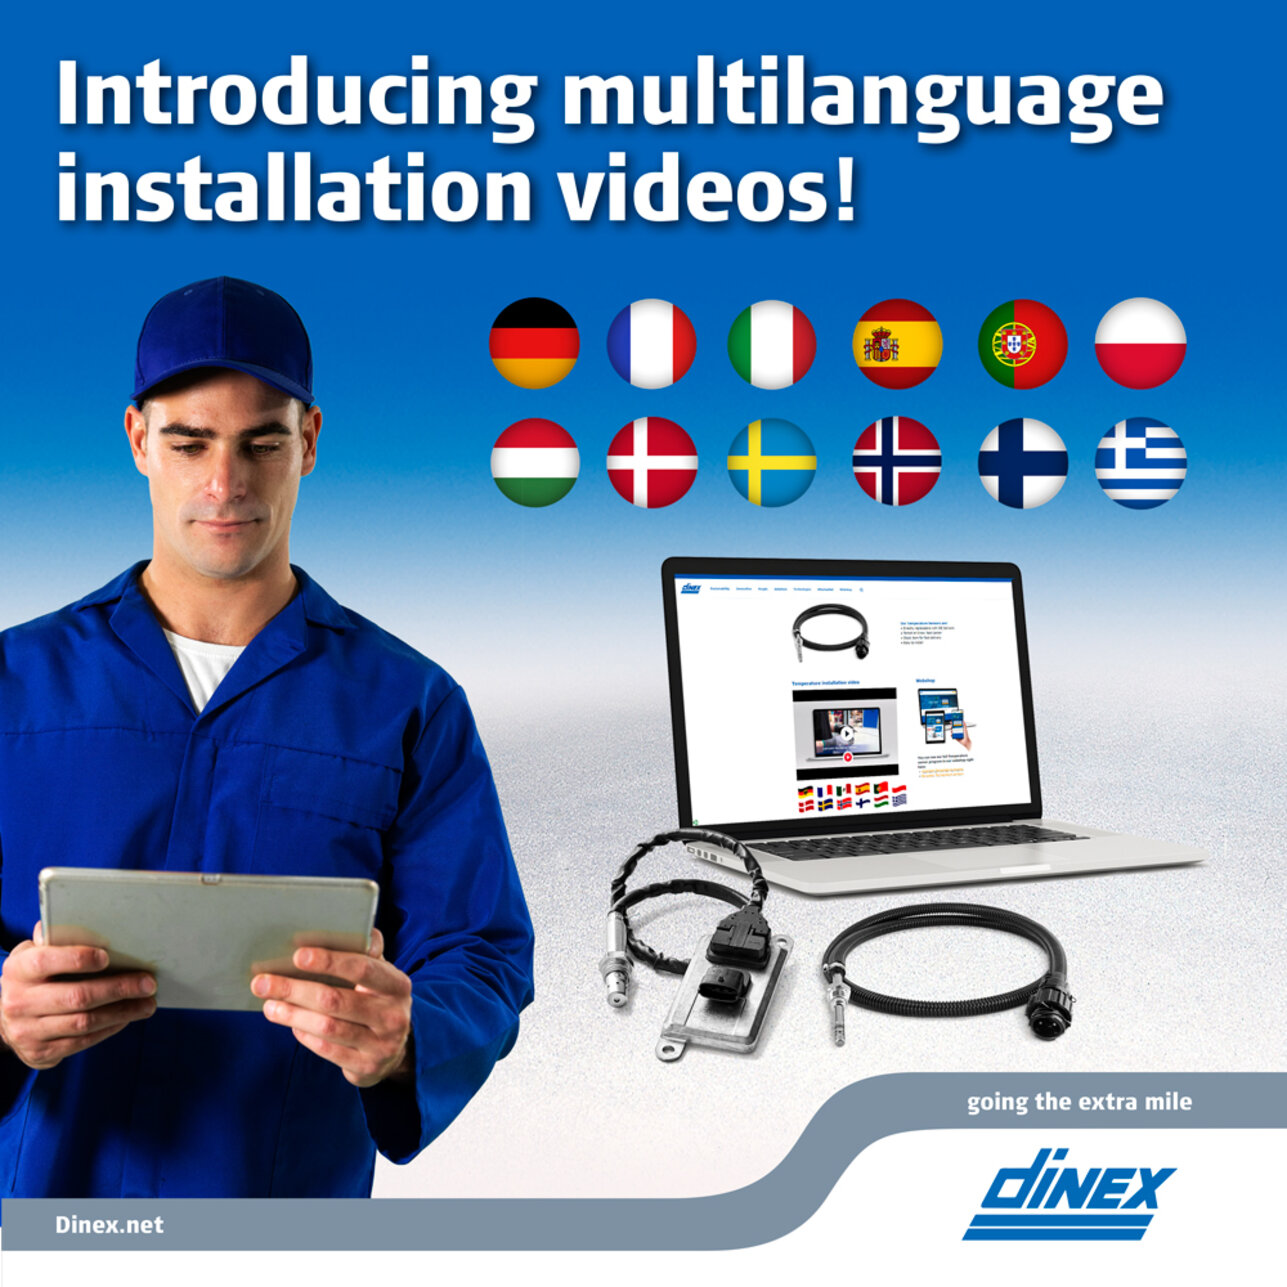 Dinex - Introducing multilanguage installation videos